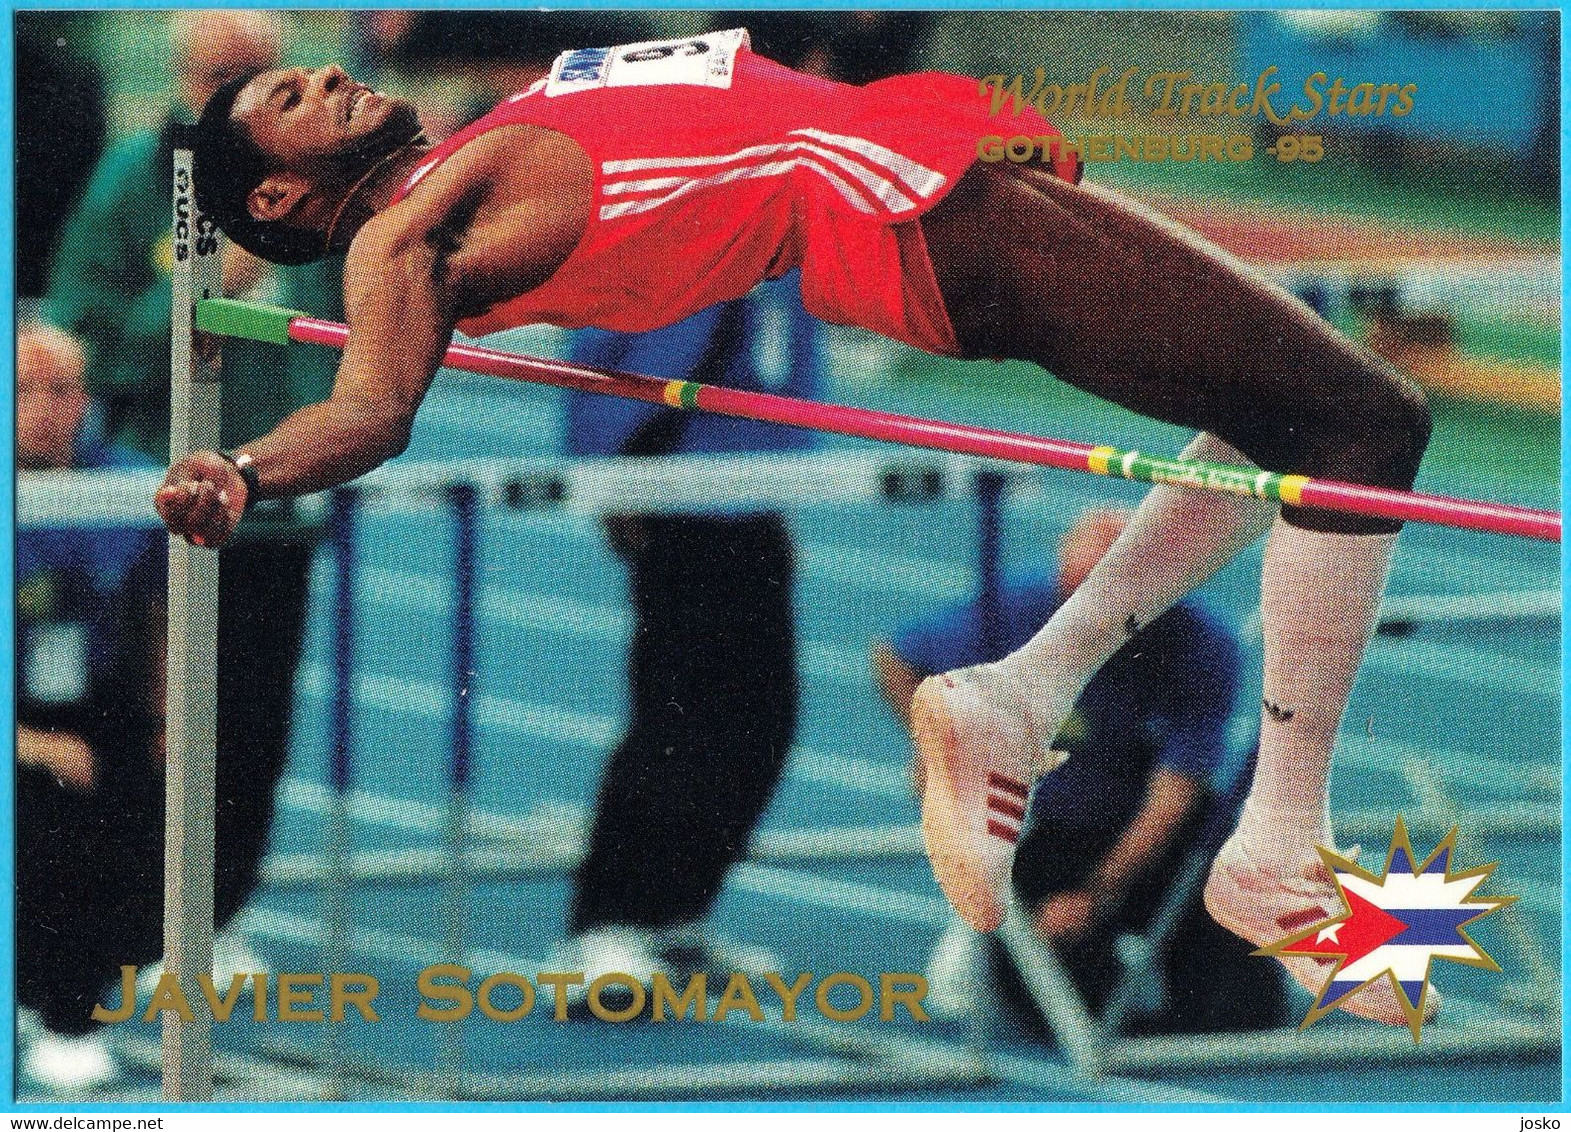 JAVIER SOTOMAYOR Cuba (High Jump) - 1995 WORLD CHAMPIONSHIPS IN ATHLETICS - Trading Card * Athletisme Athletik Atletica - Trading Cards